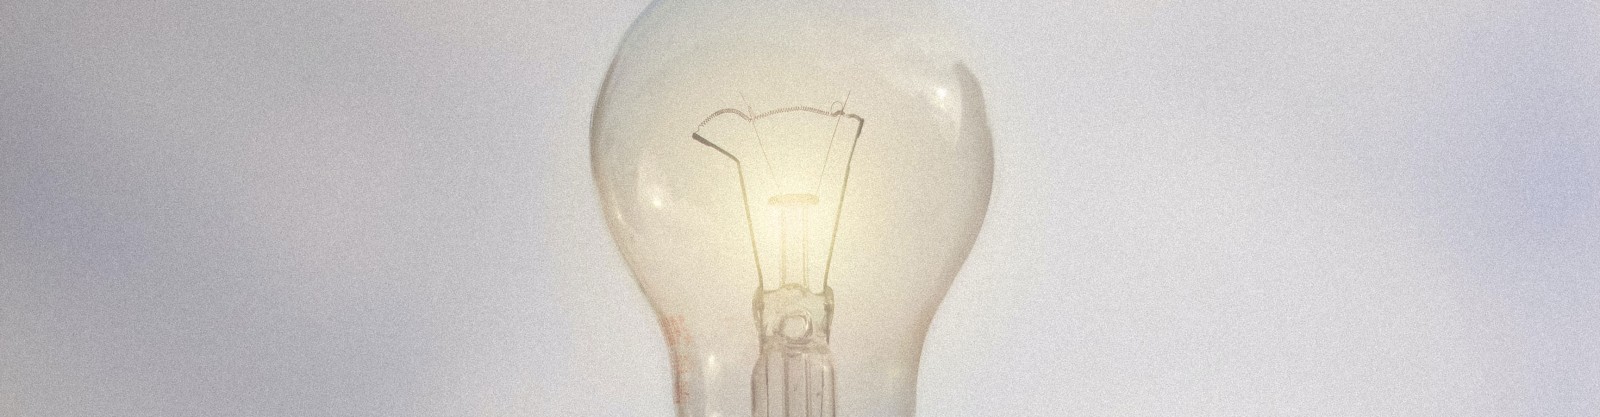 A glowing lightbulb